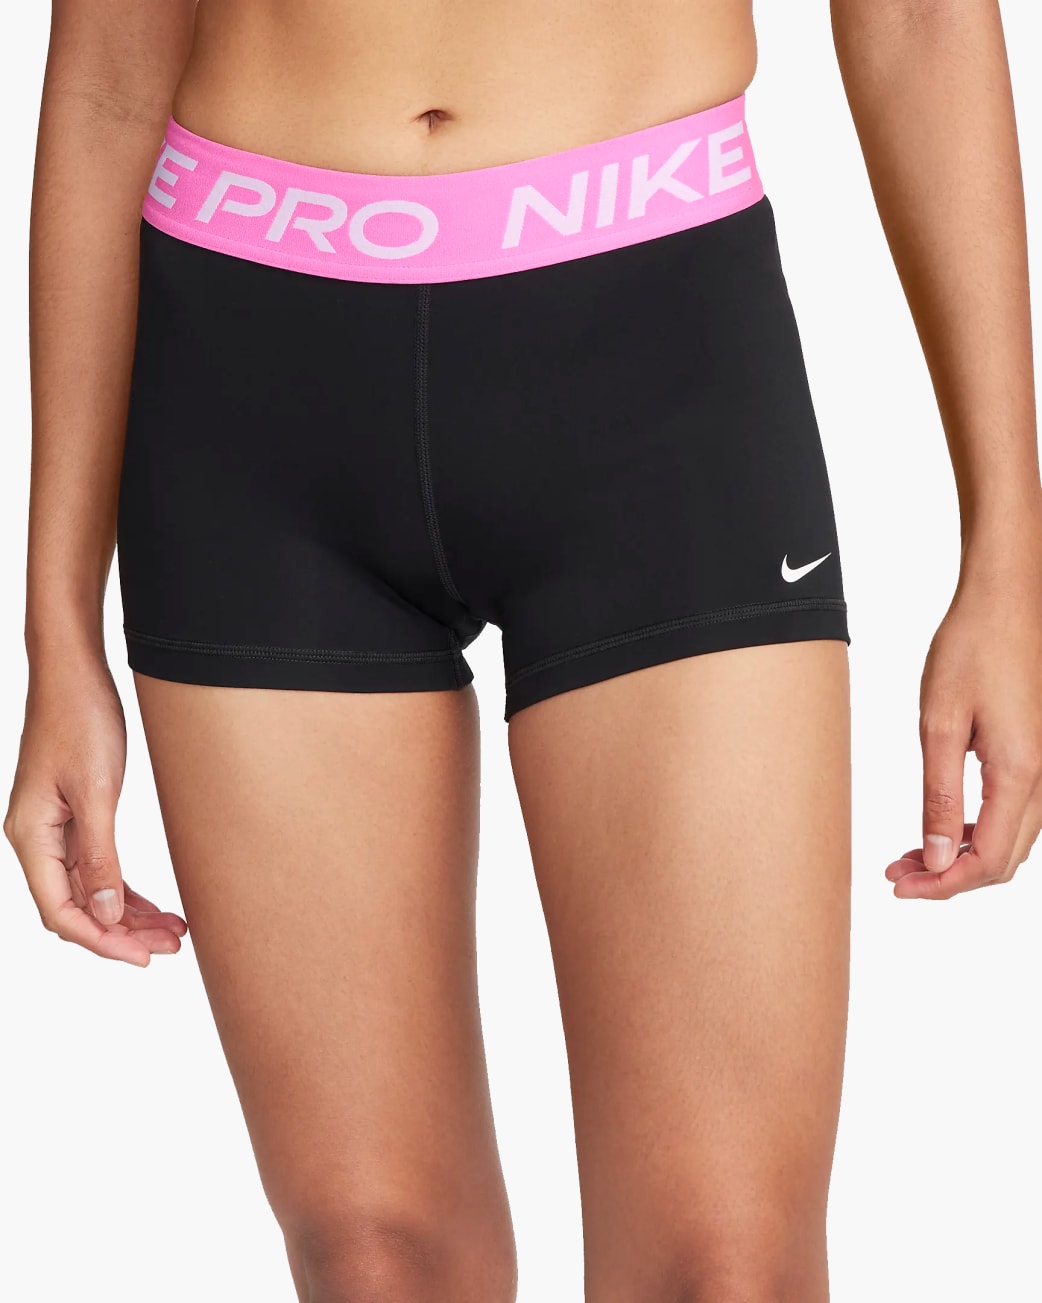 Nike Women's 3 Pro Training Shorts - Black / Playful Pink / White